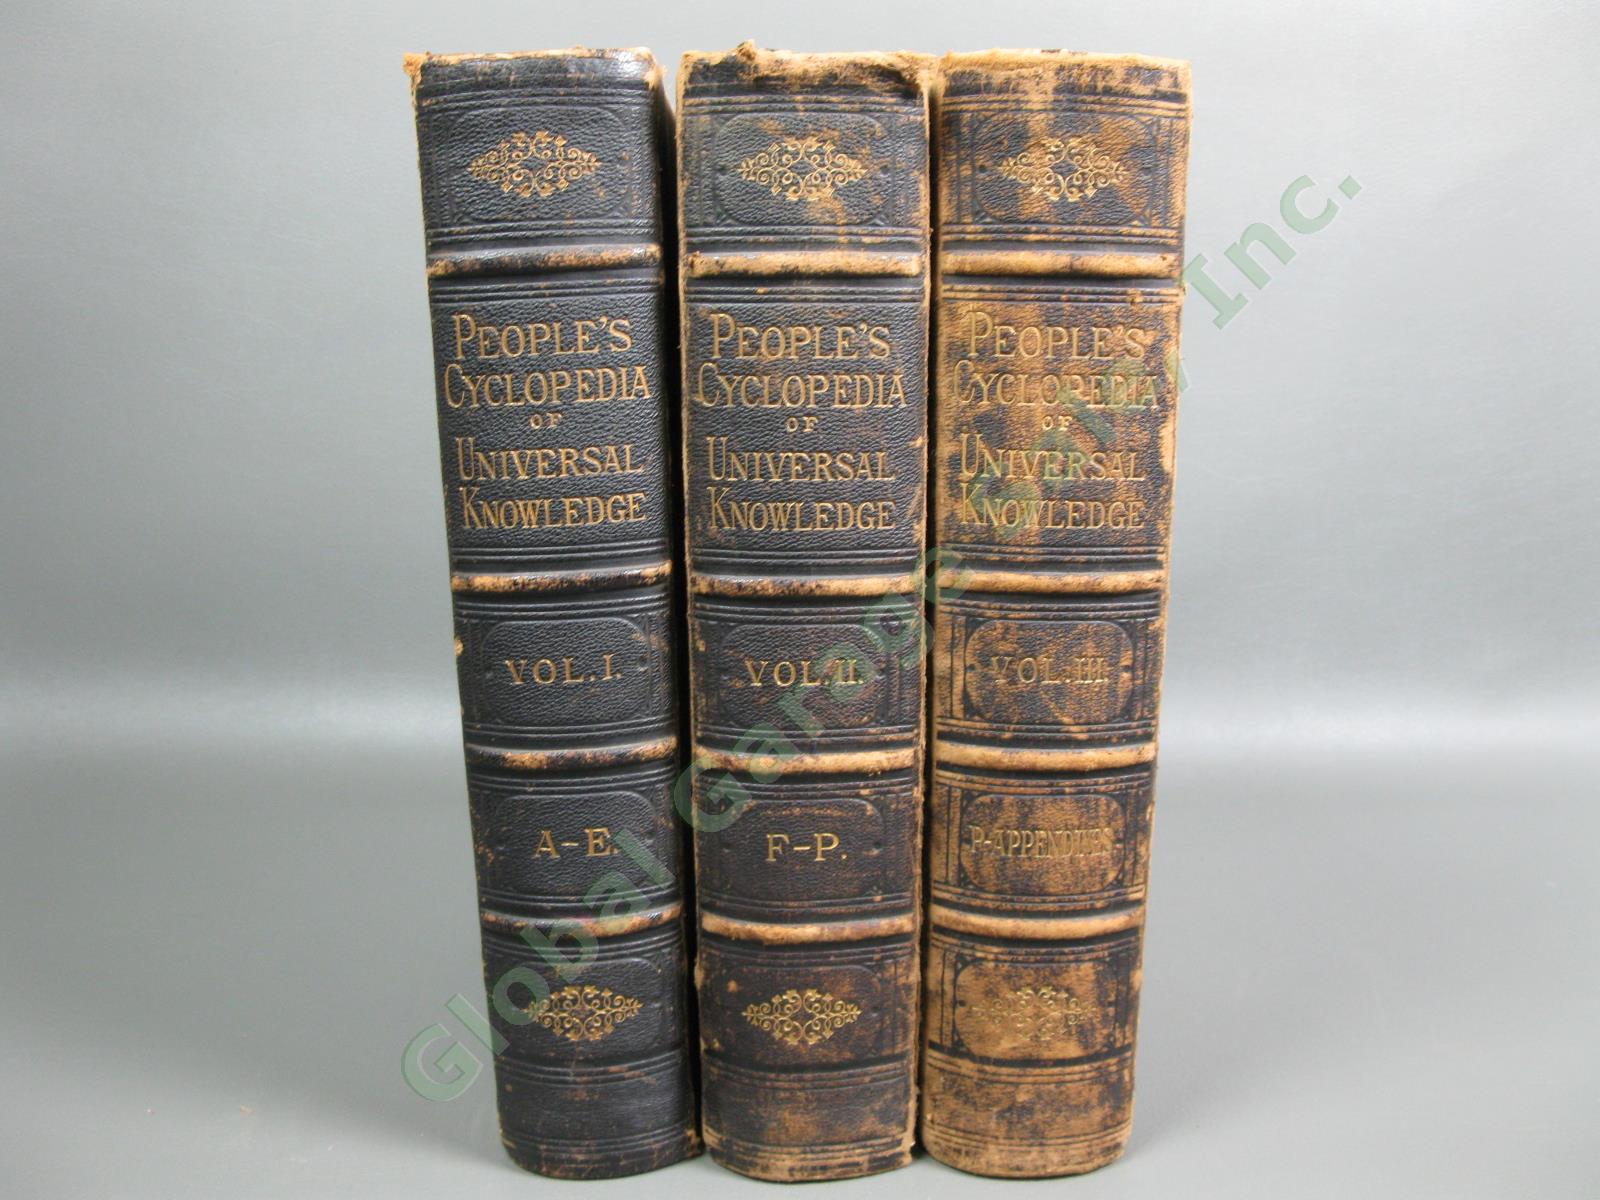 1883 Peoples Cyclopedia Universal Knowledge Vol 1-3 Illustrated Encyclopedia Set 1